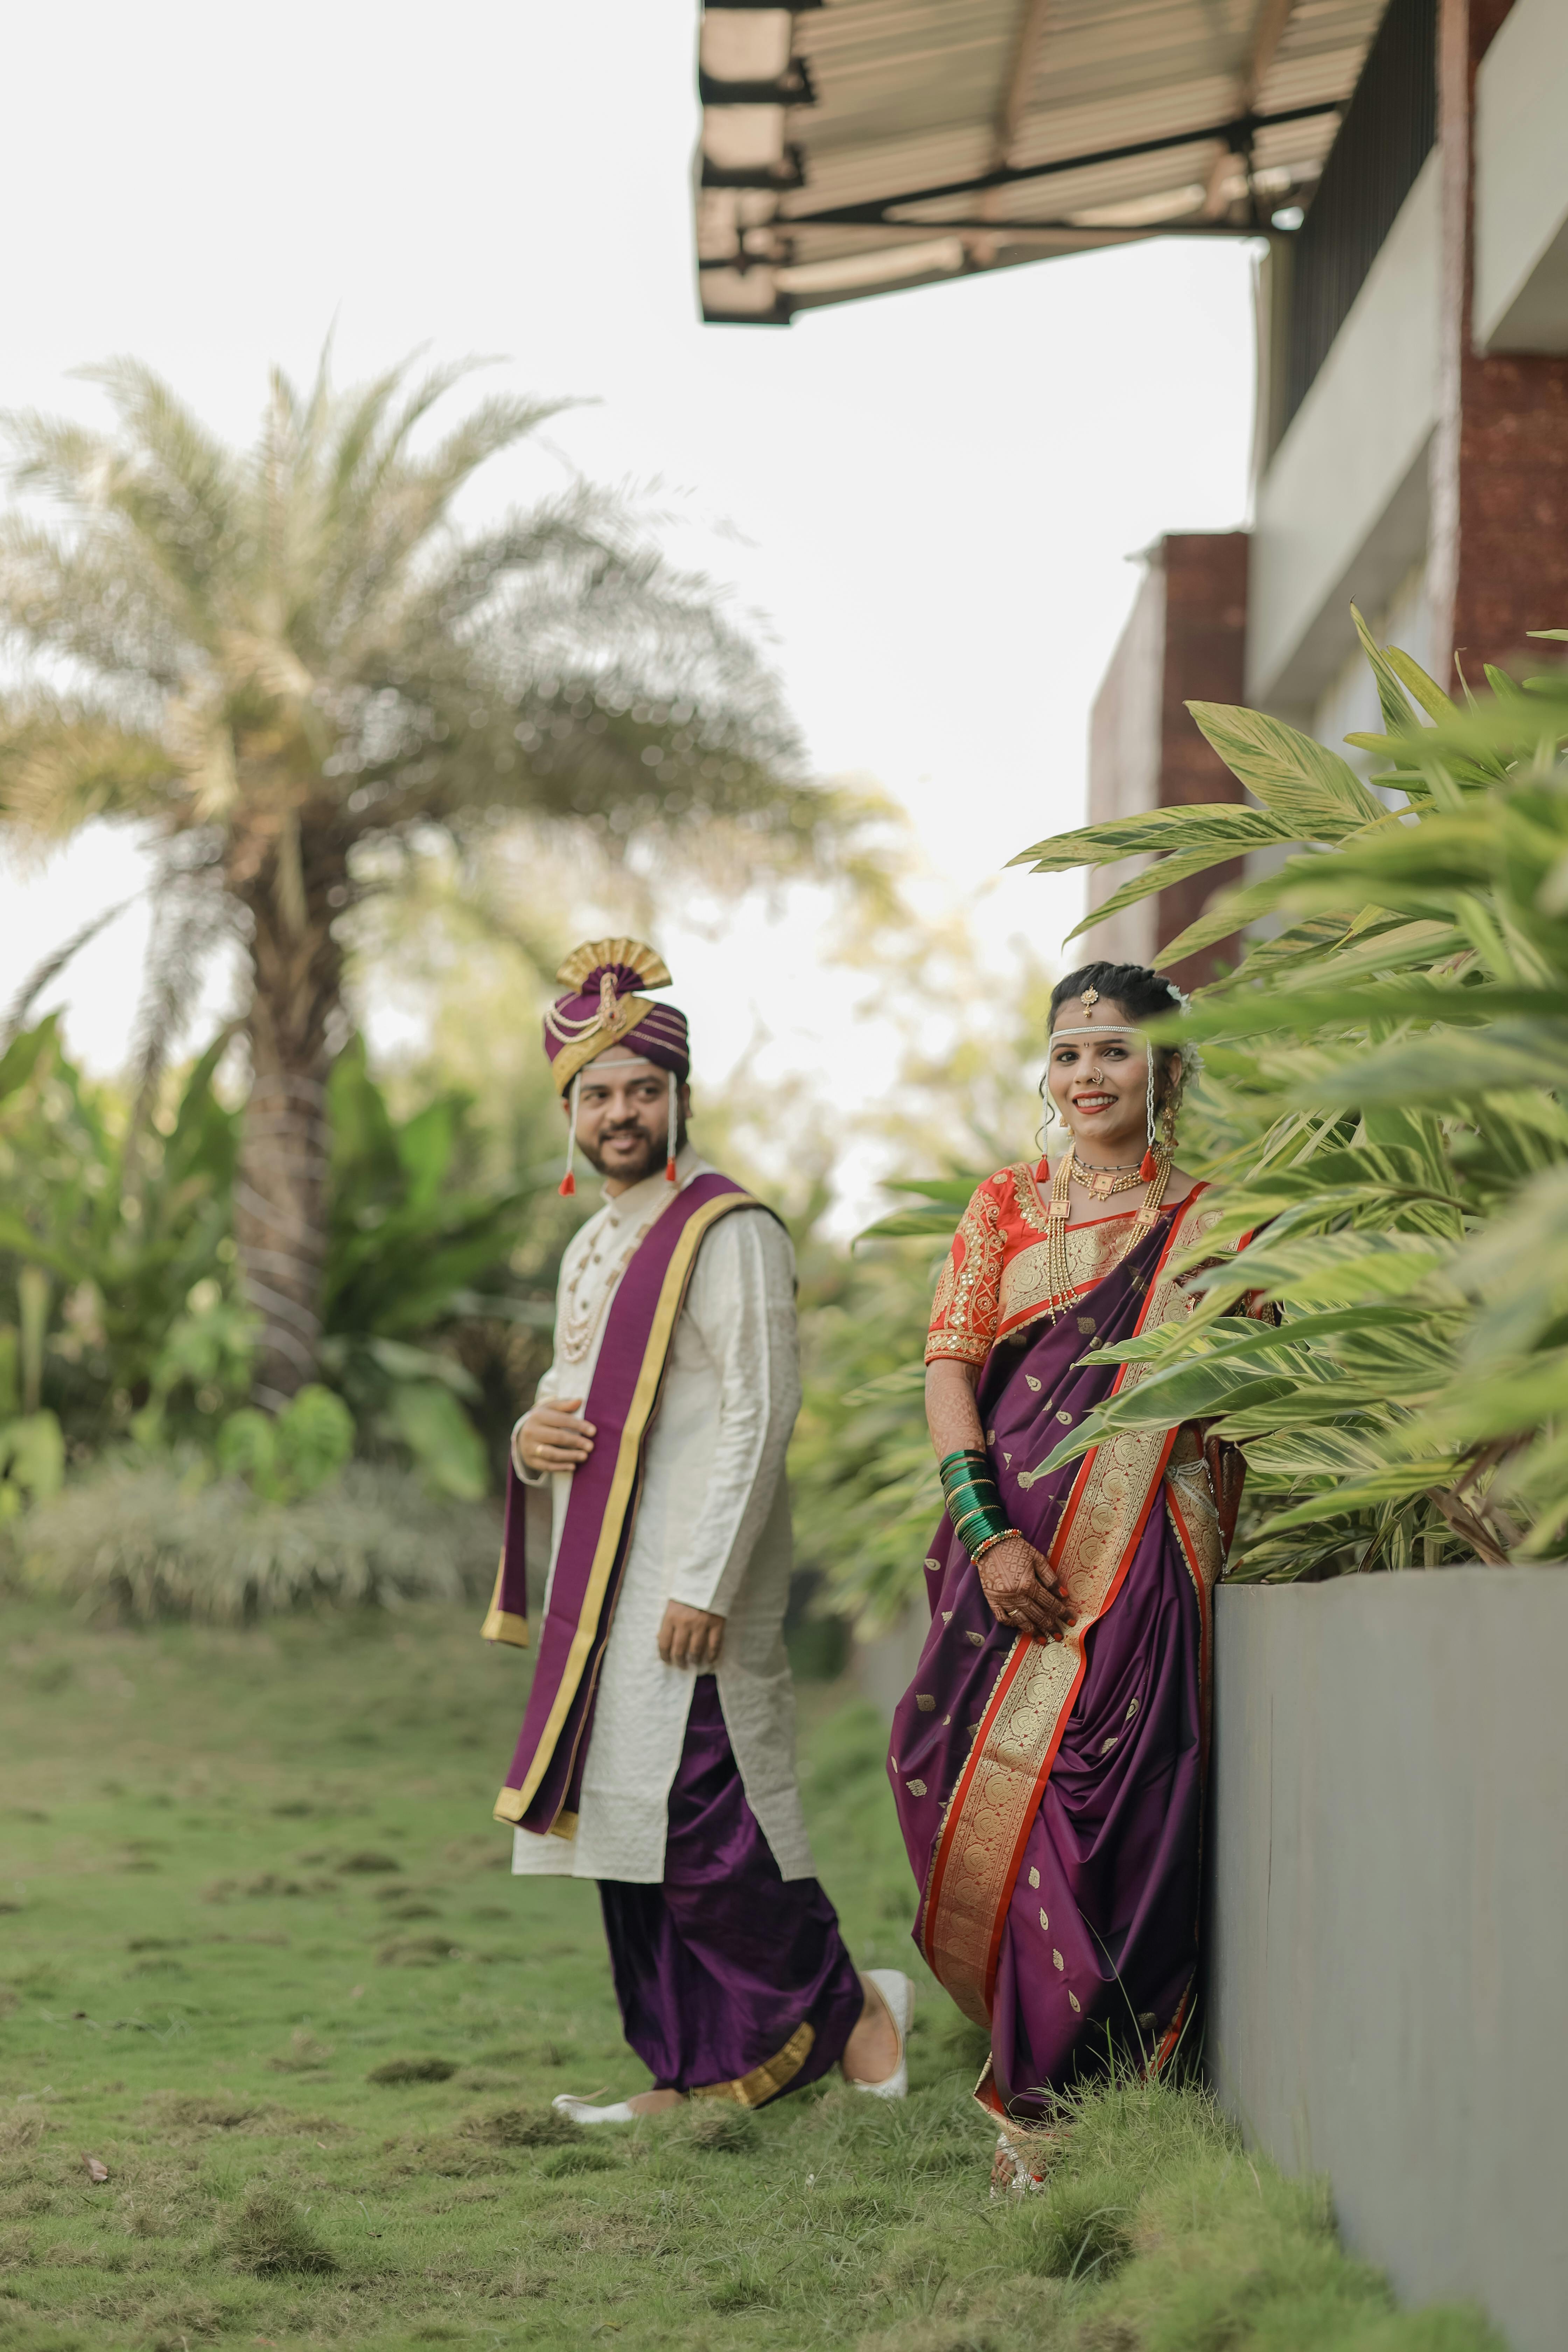 Maharashtrian Weddings: Customs and Traditions